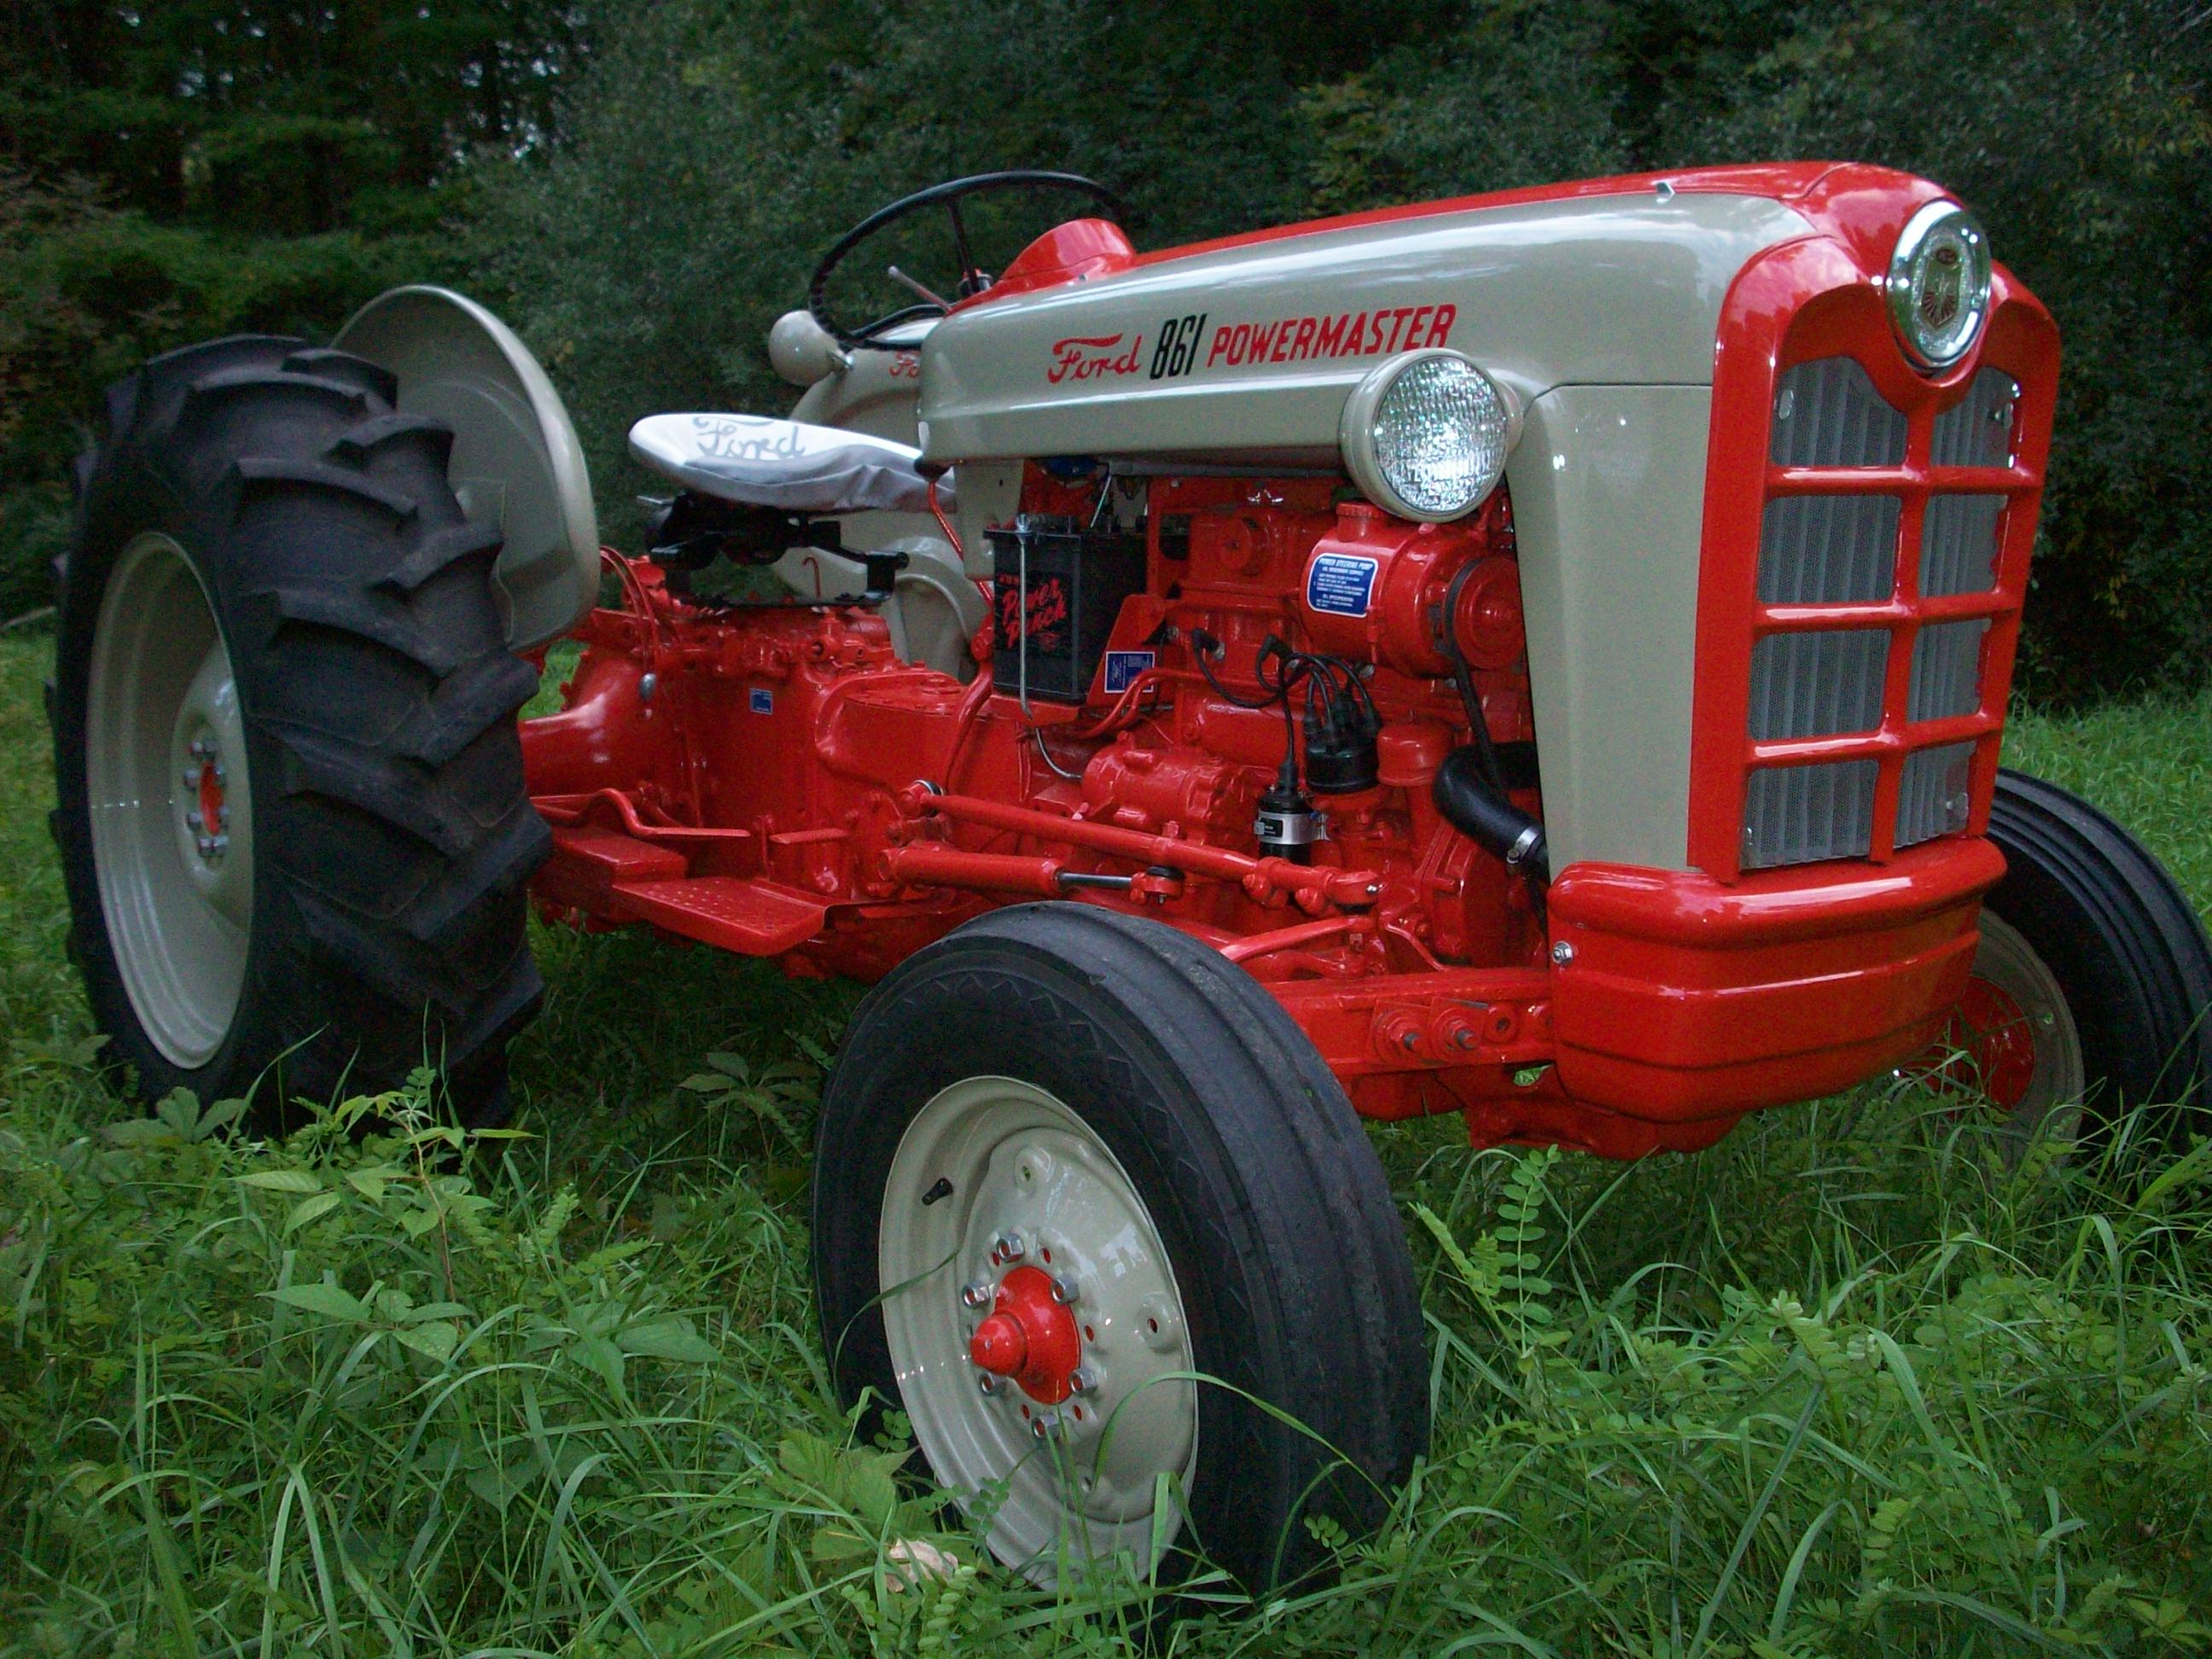 1959 Ford 861 powermaster tractor #8